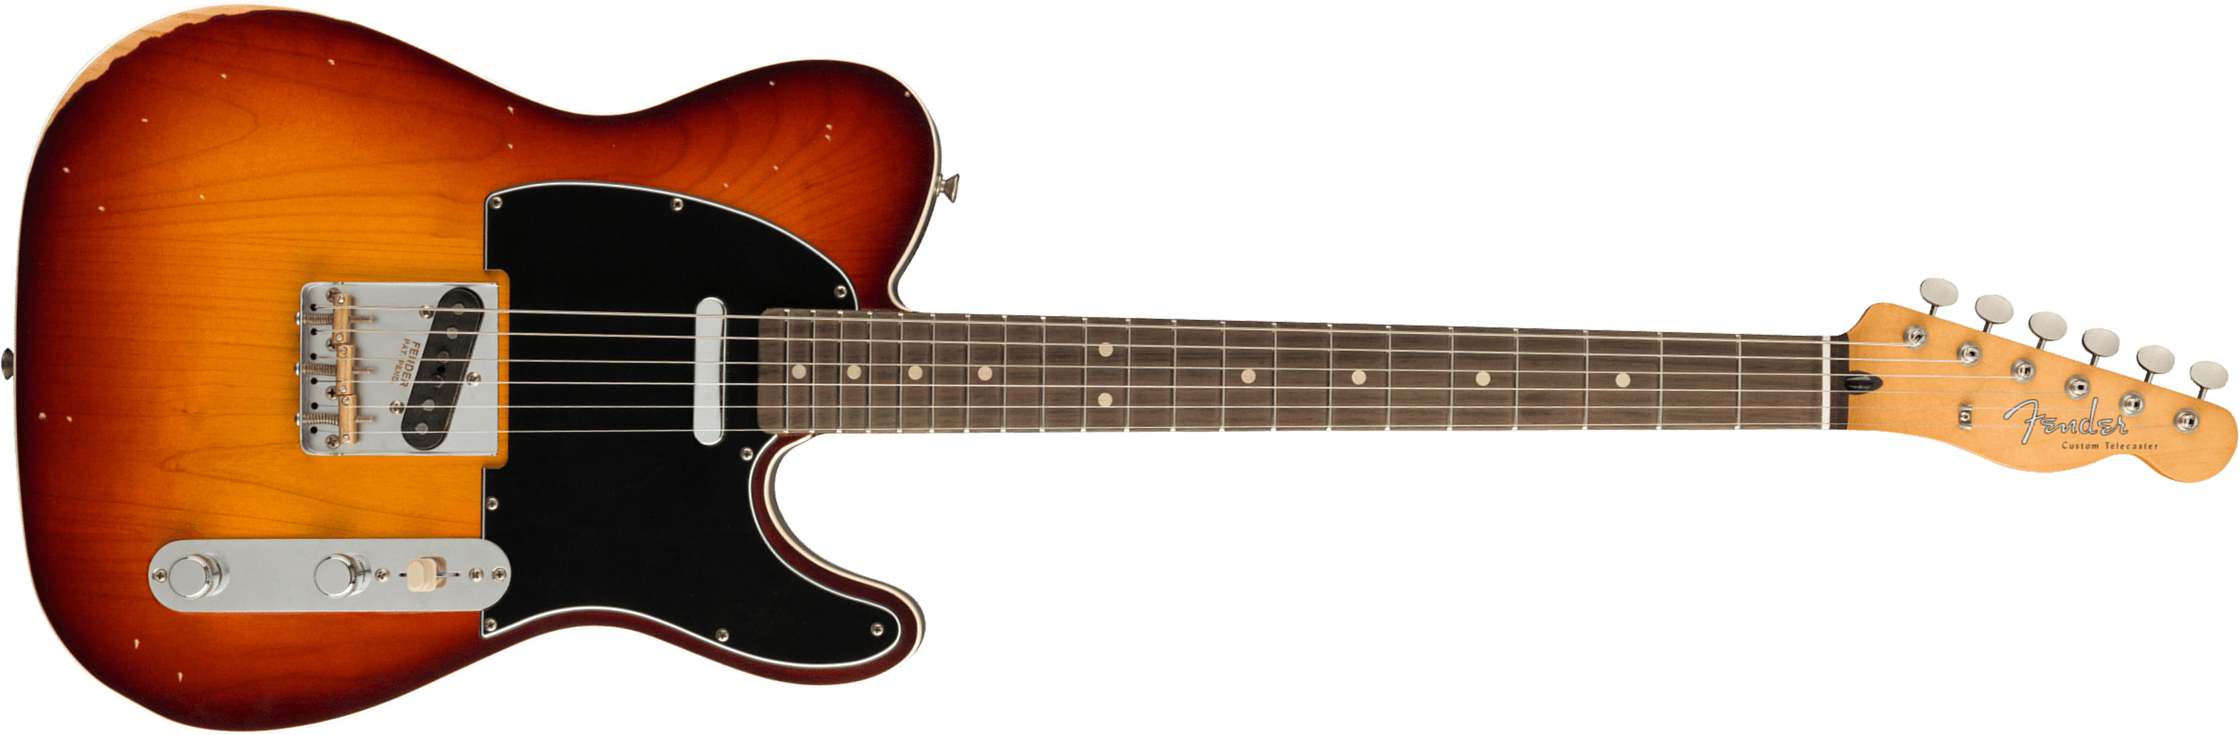 Fender Jason Isbell Tele Custom Signature Rw +housse - Road Worn 3-color Chocolate Burst - Tel shape electric guitar - Main picture